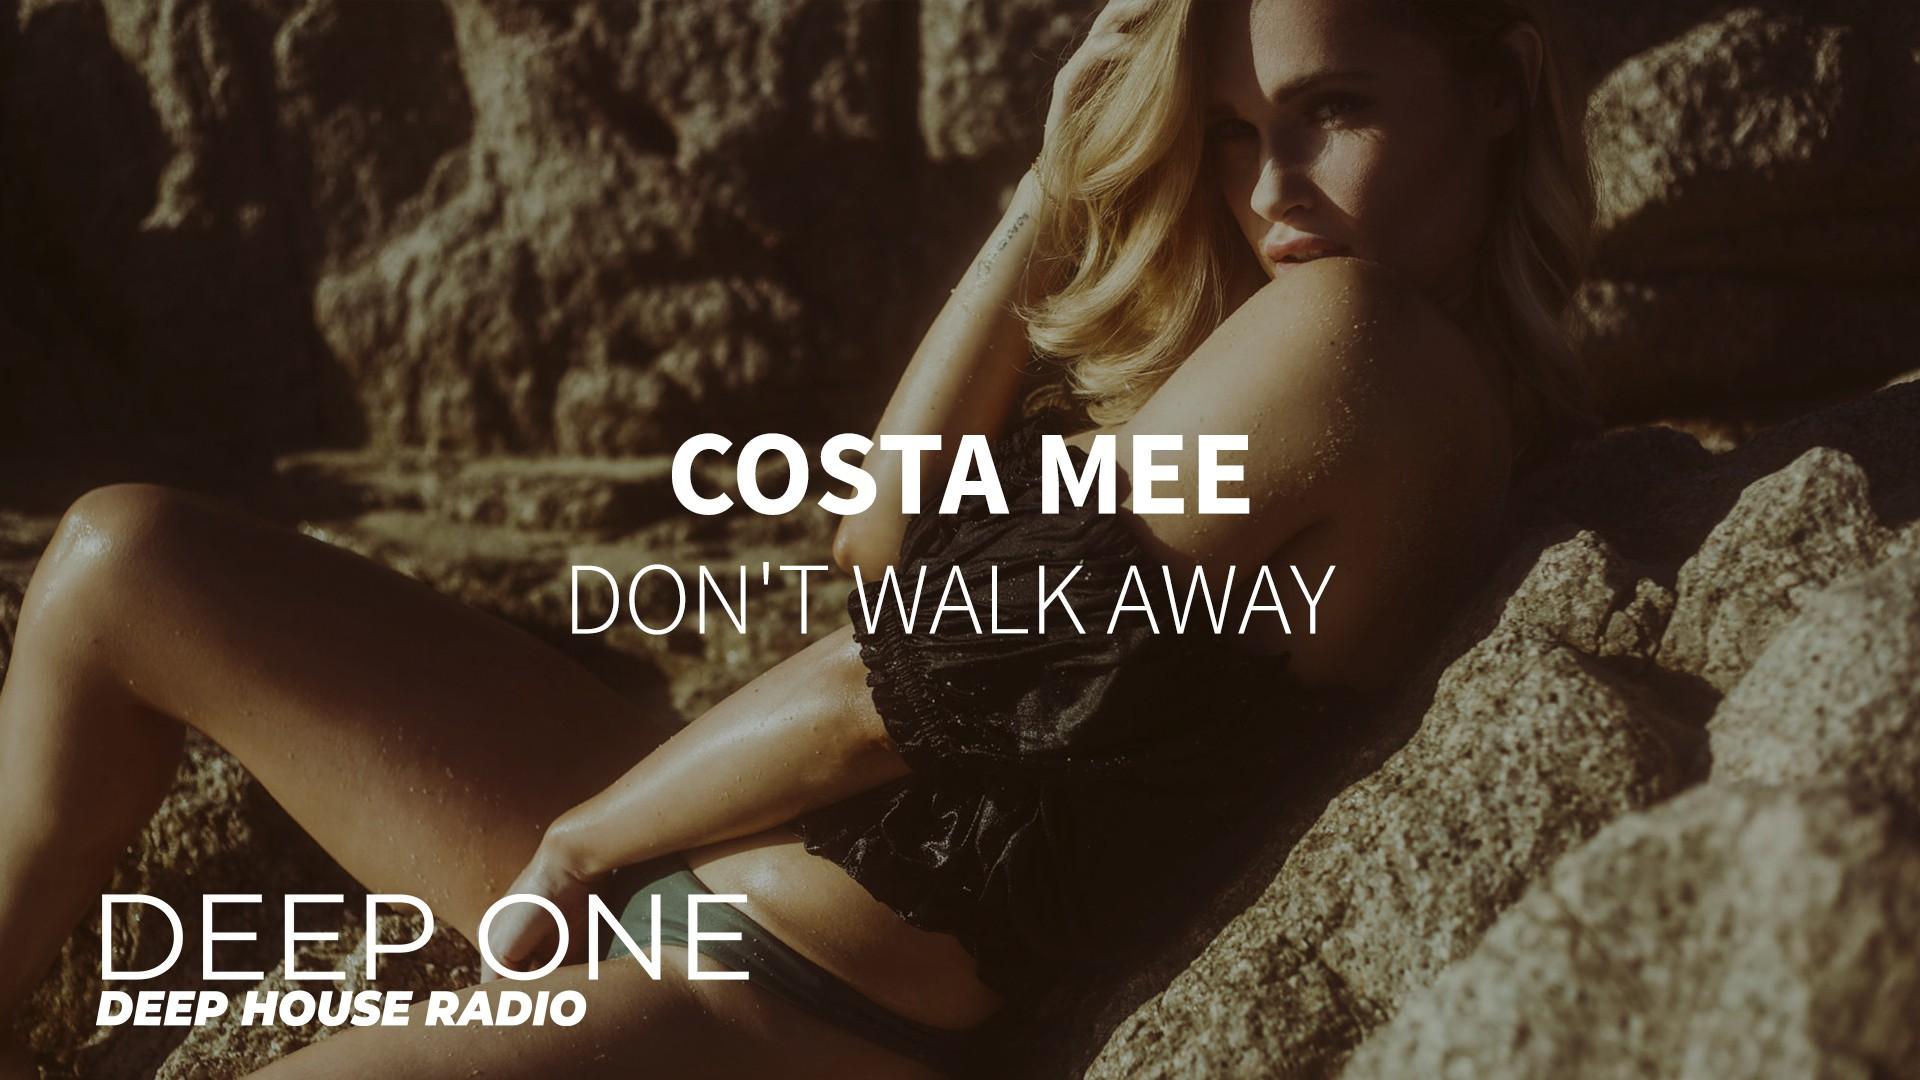 Costa mee певица. Costa mee - Addiction (Original Mix). Hold on to me - Costa mee.